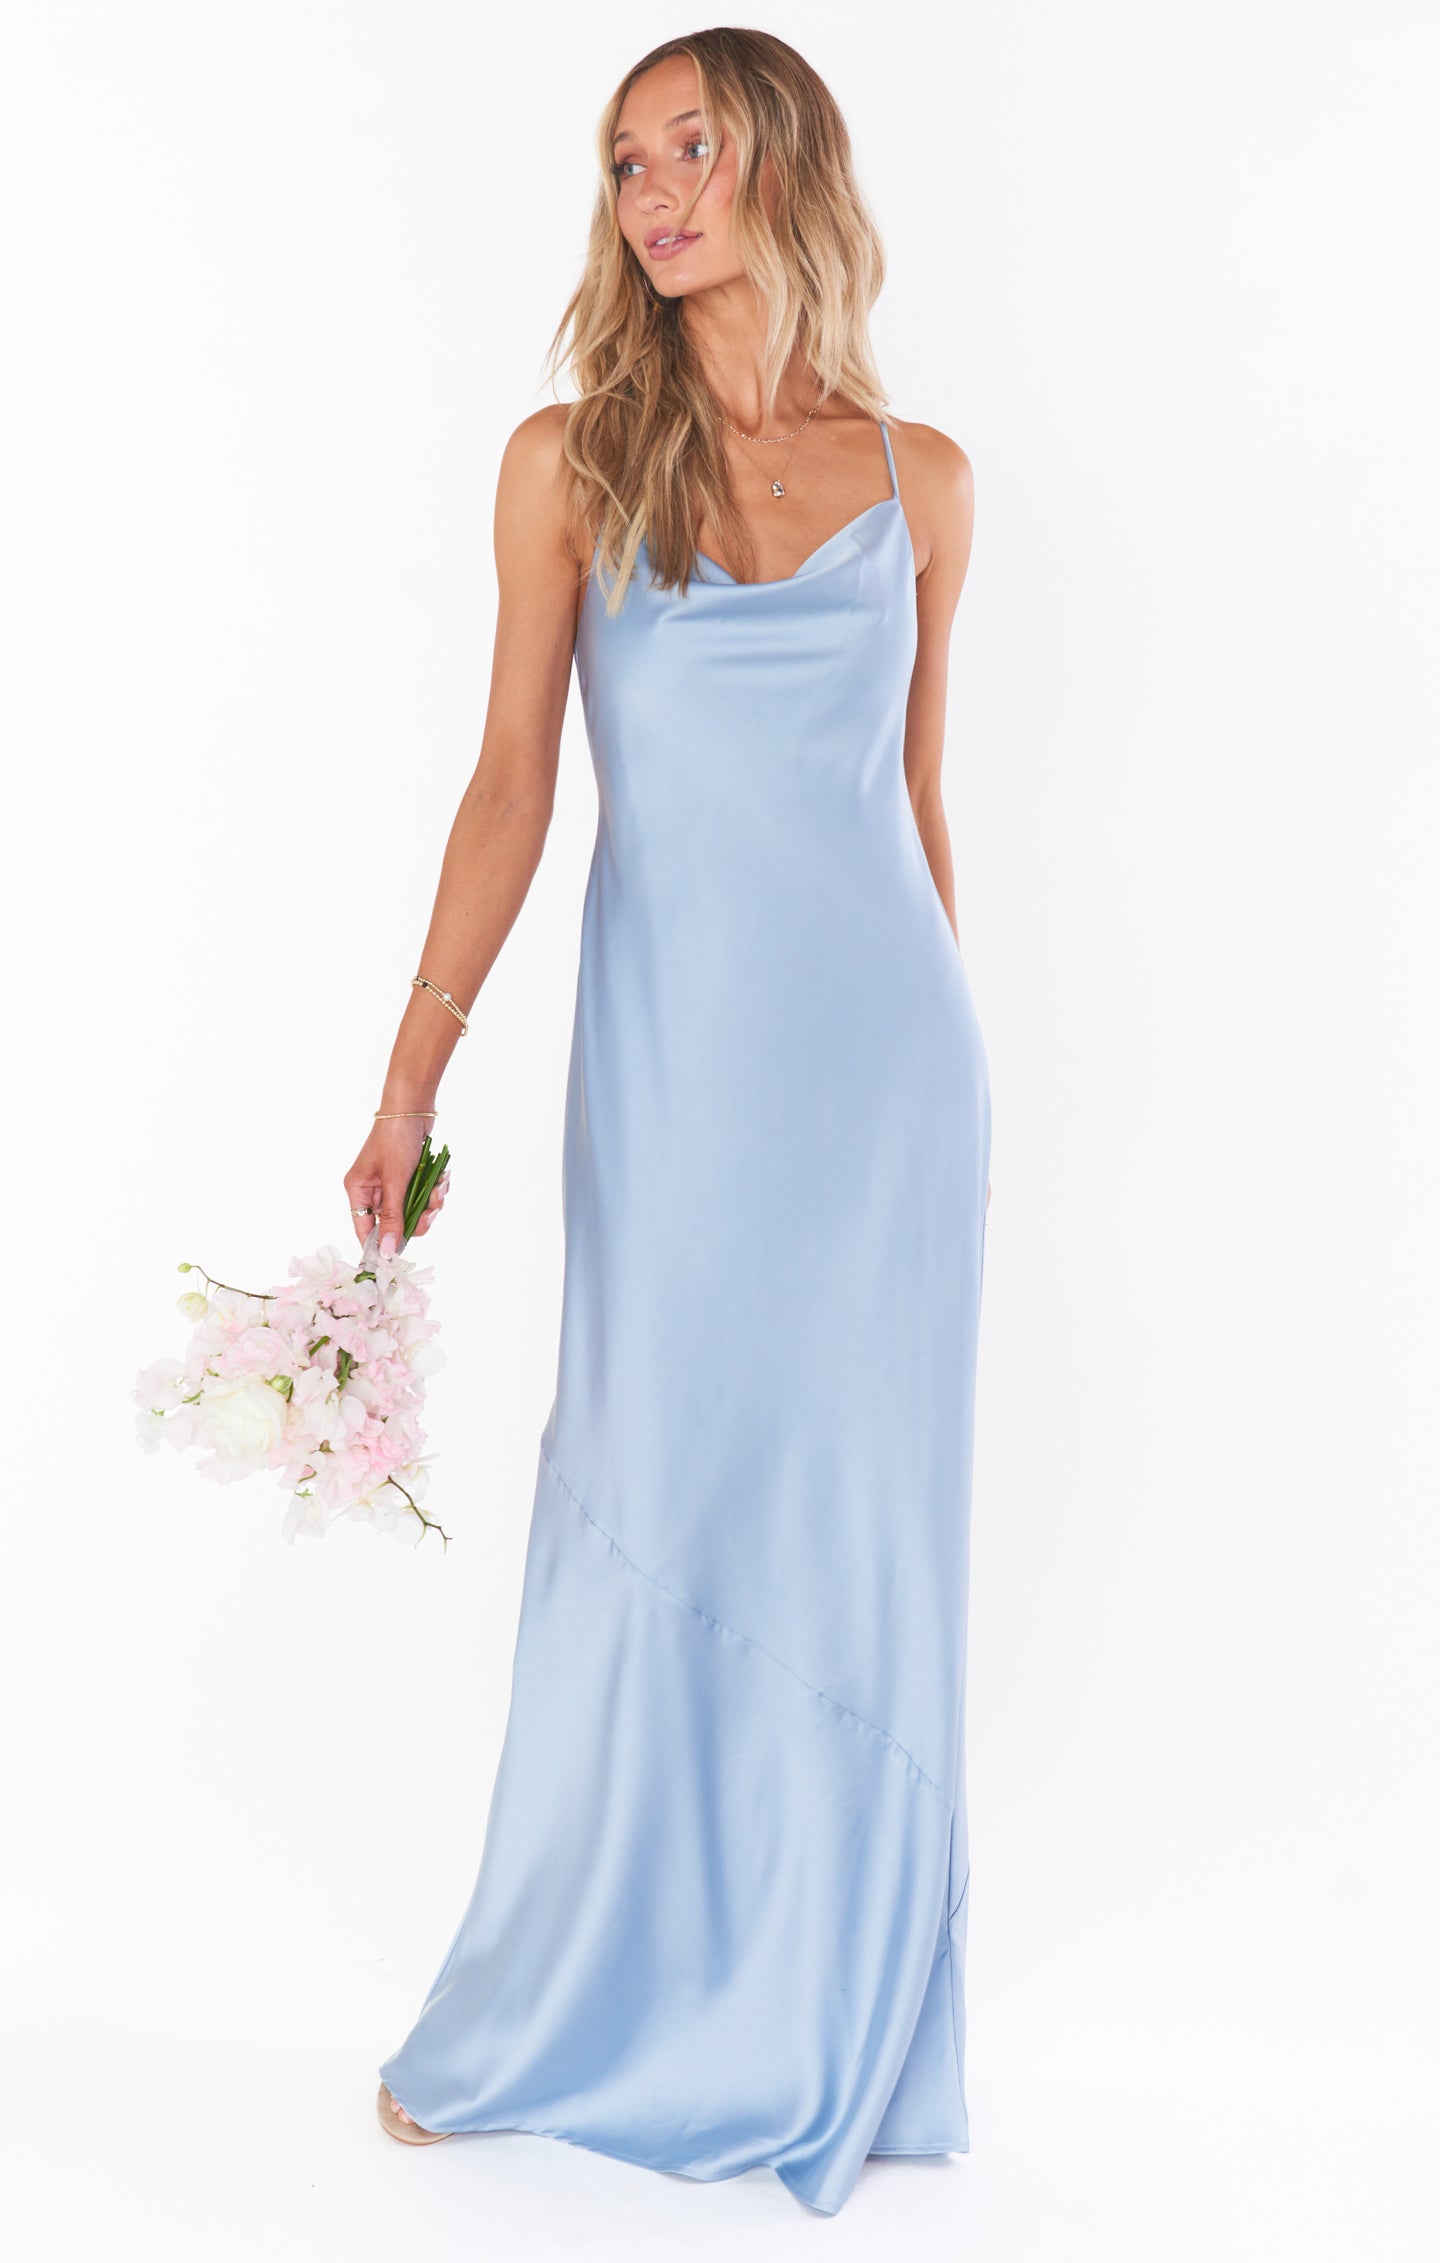 Tuscany Maxi Slip Dress ~ Steel Blue Luxe Satin